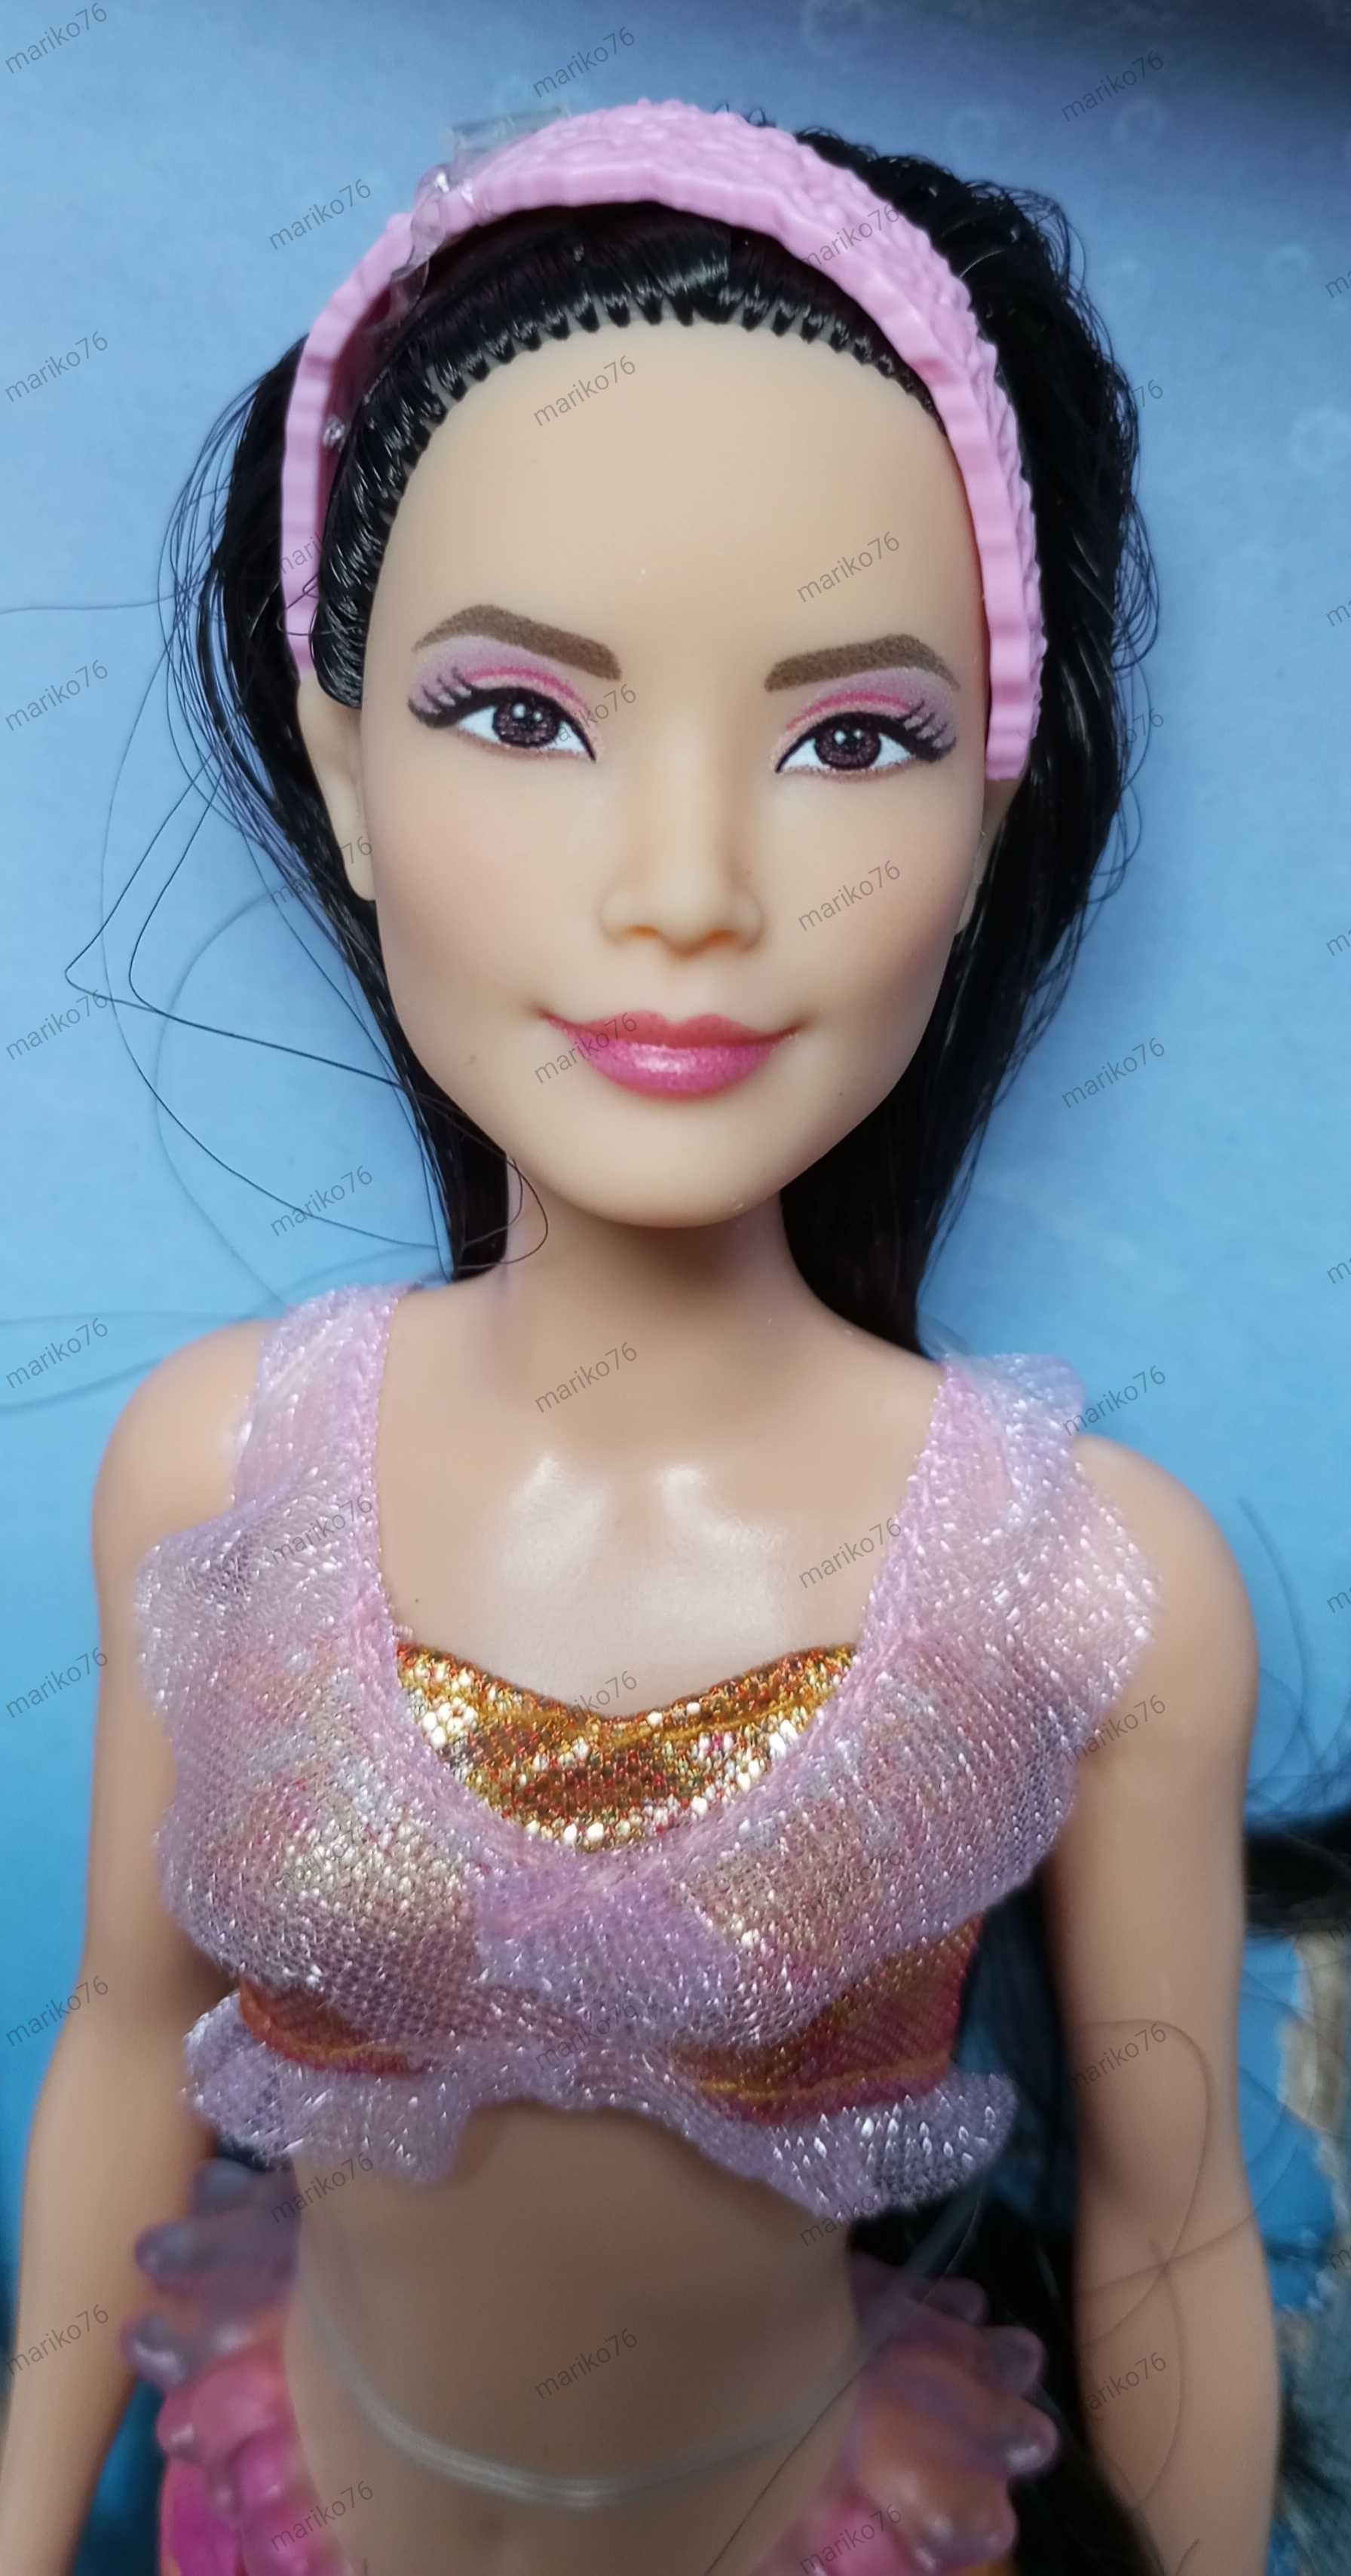 Lalka Barbie/Disney Mala "Mała syrenka" siostry